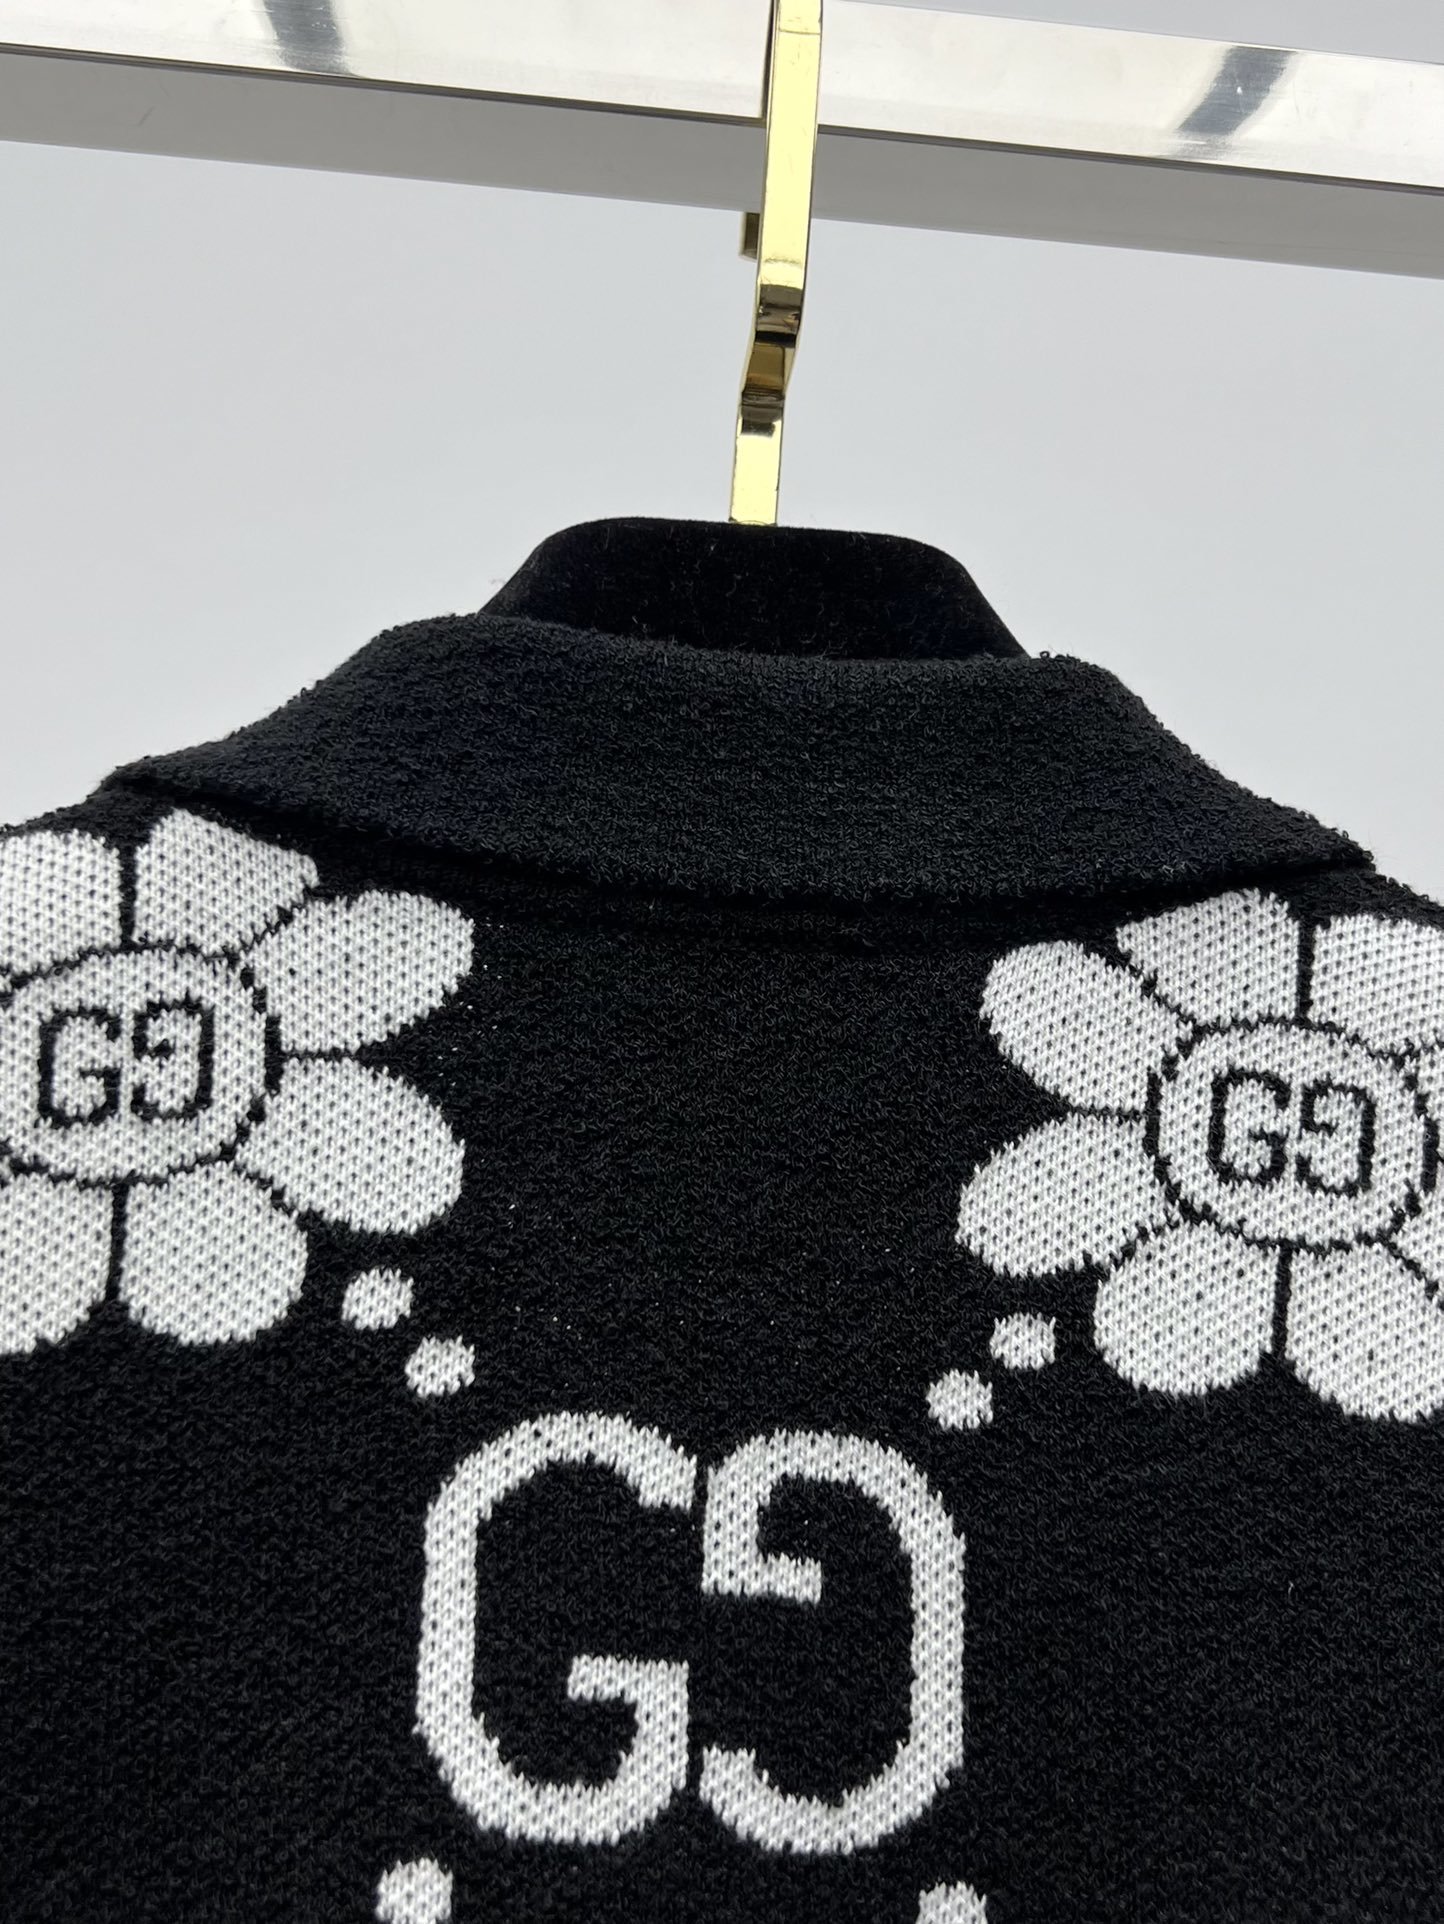 Gucc*花朵提花针织套装getit限定系列短款polo开衫半身裙黑色和白色GG花朵棉布提花由艺术家ha